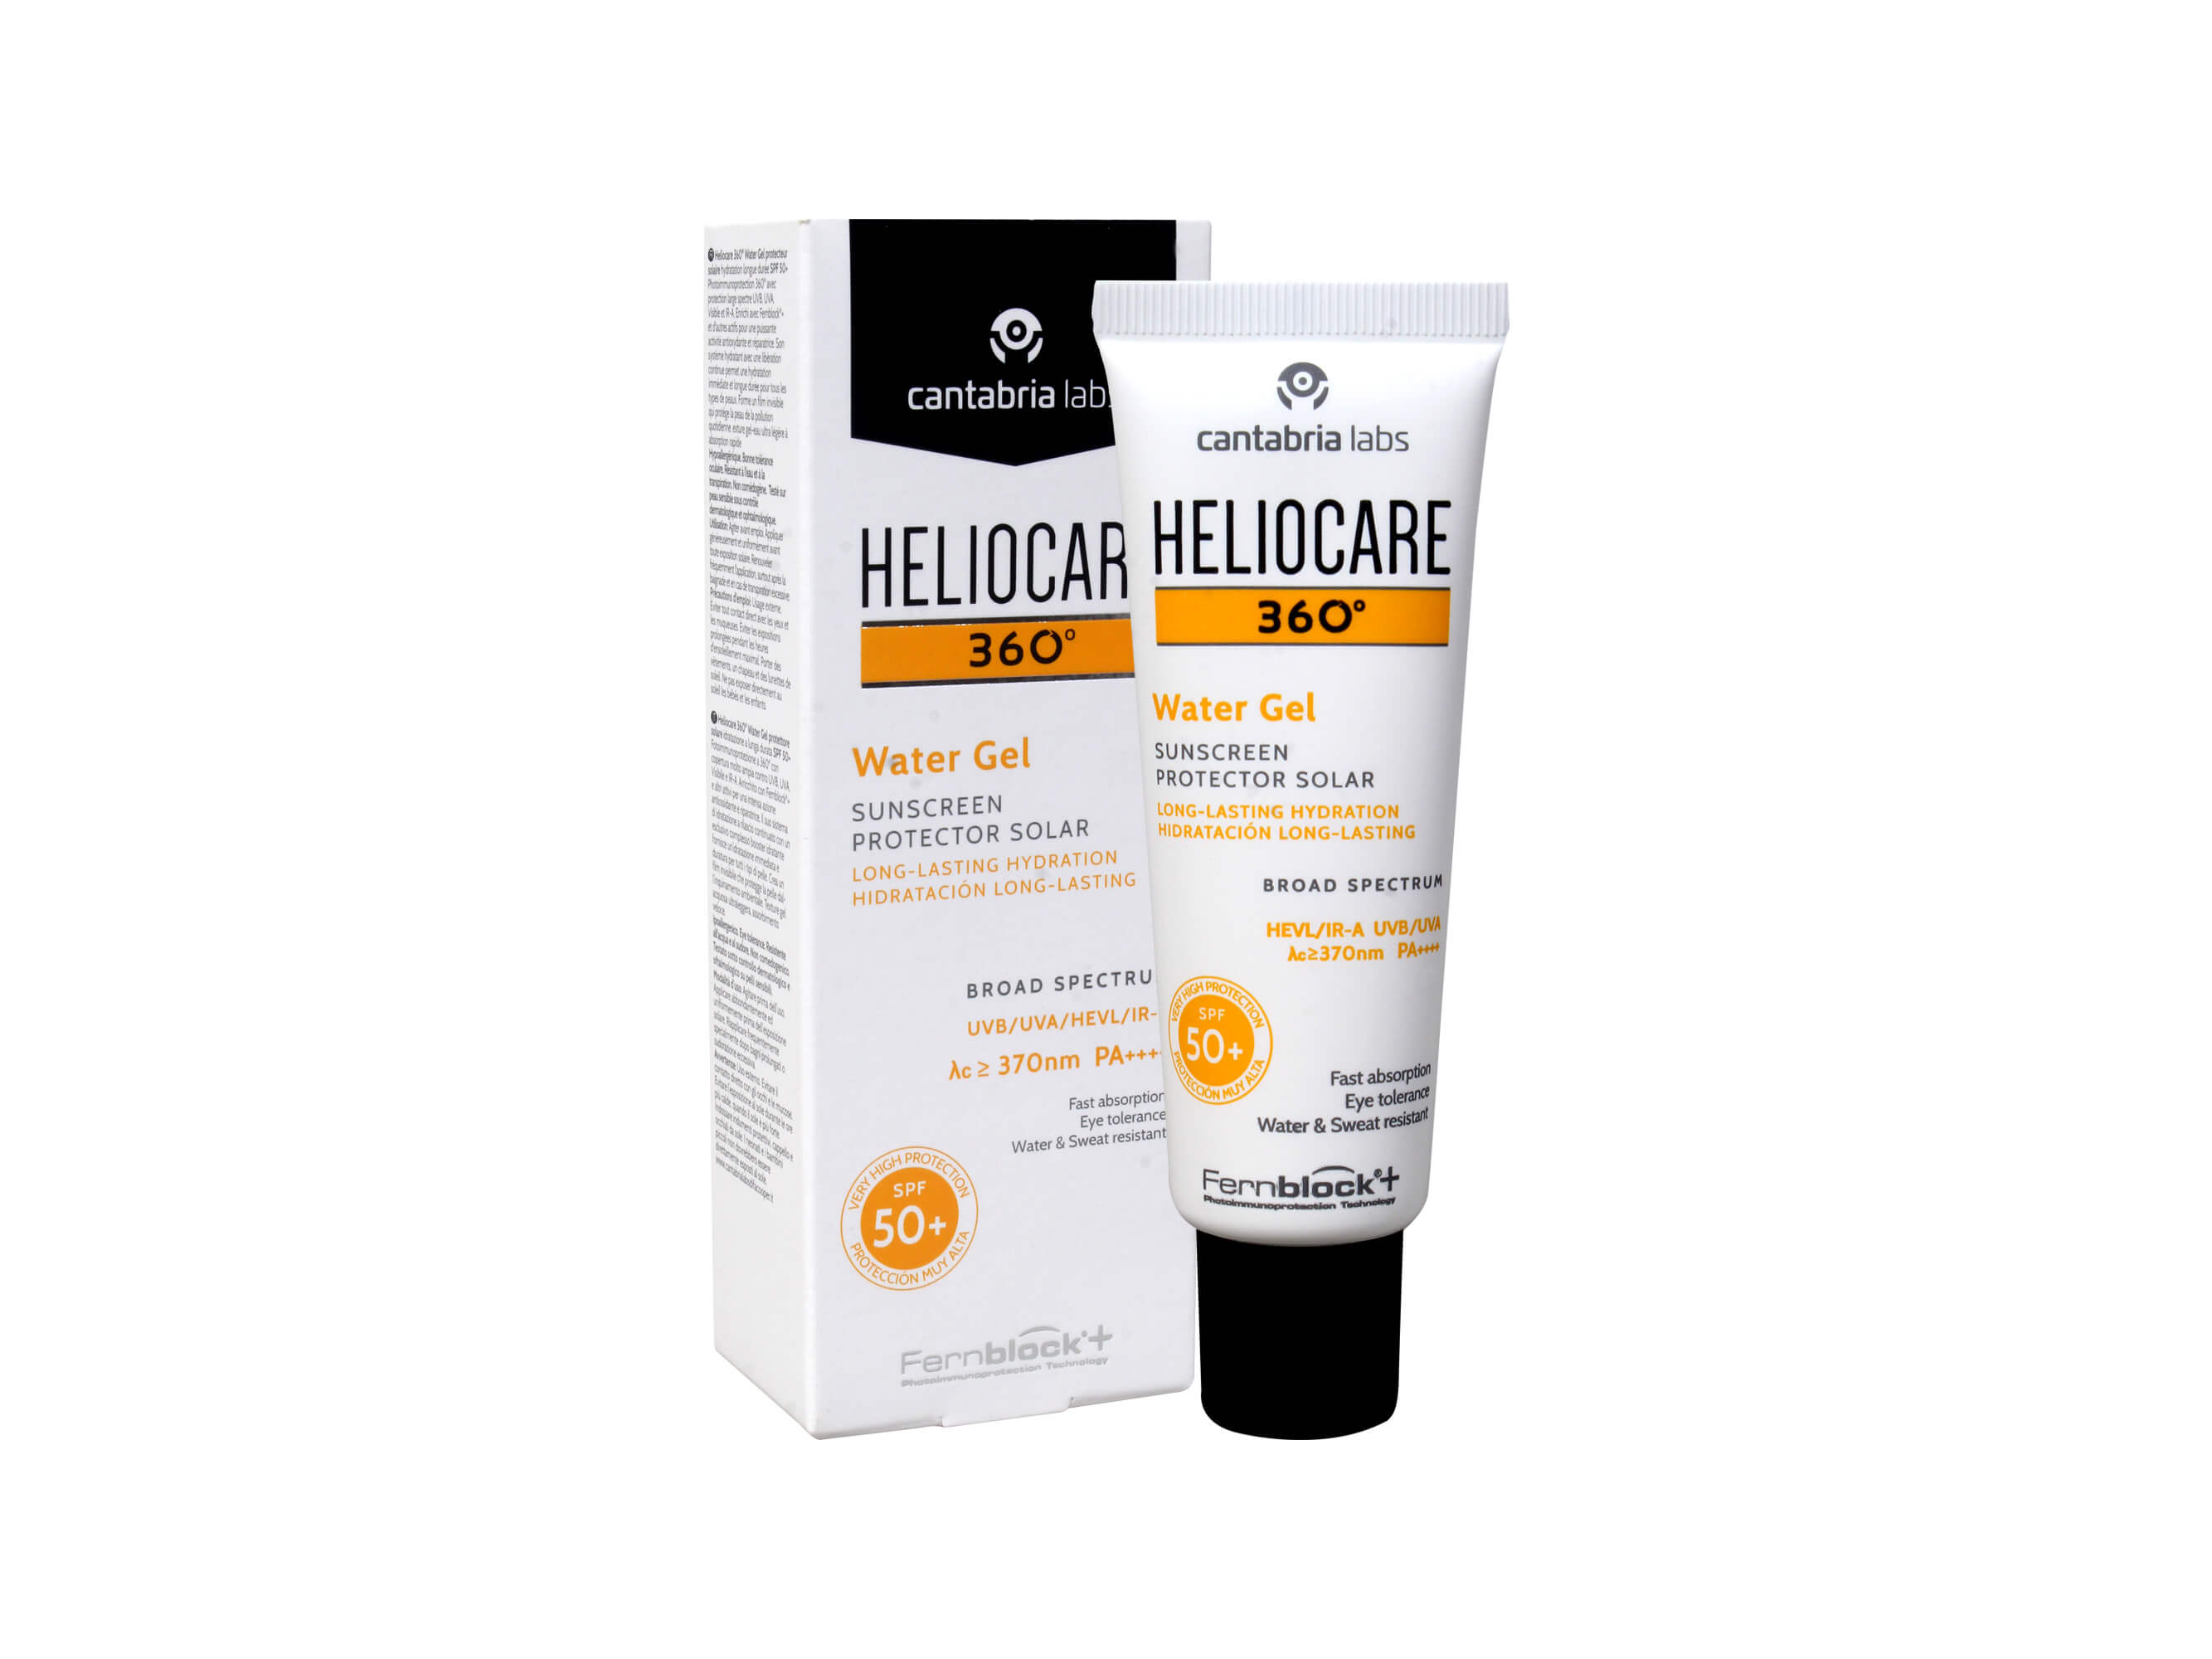 Heliocare 360 Sunscreen Protector Solar Water Gel SPF 50+/PA++++ - Clinikally